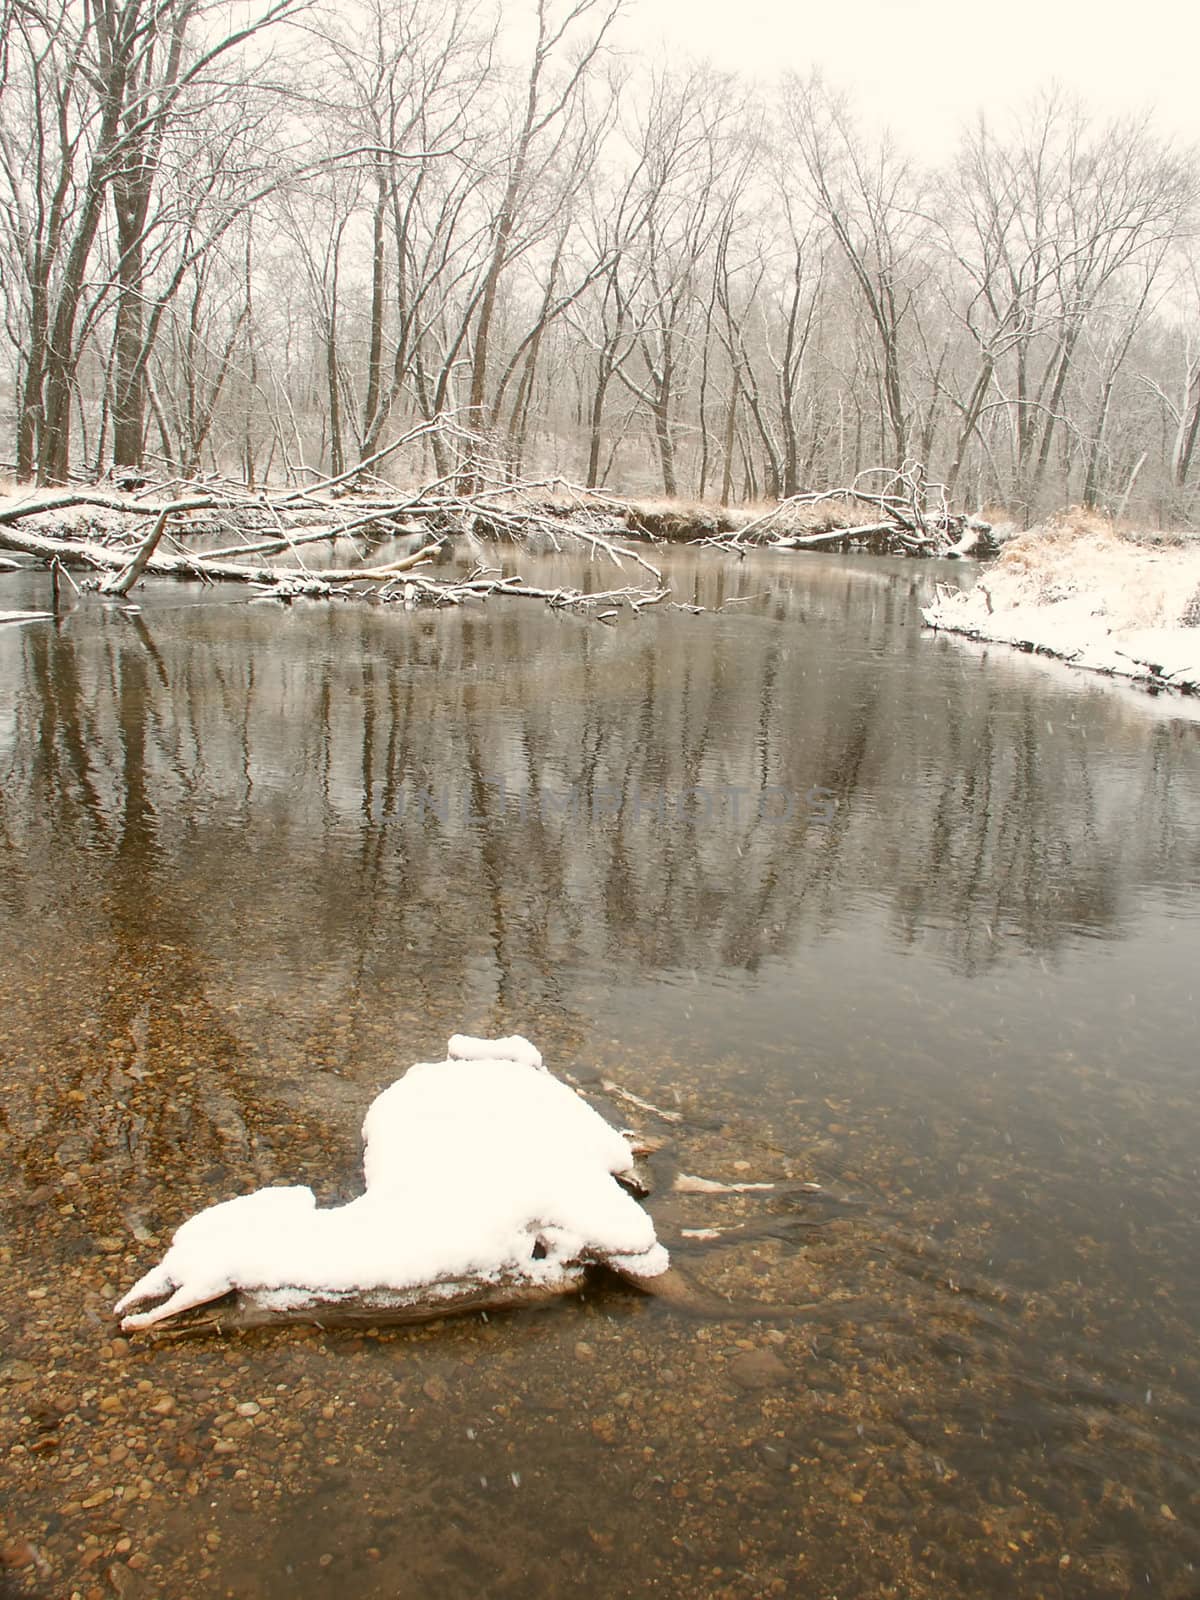 Dead Deer in Winter Cold by Wirepec